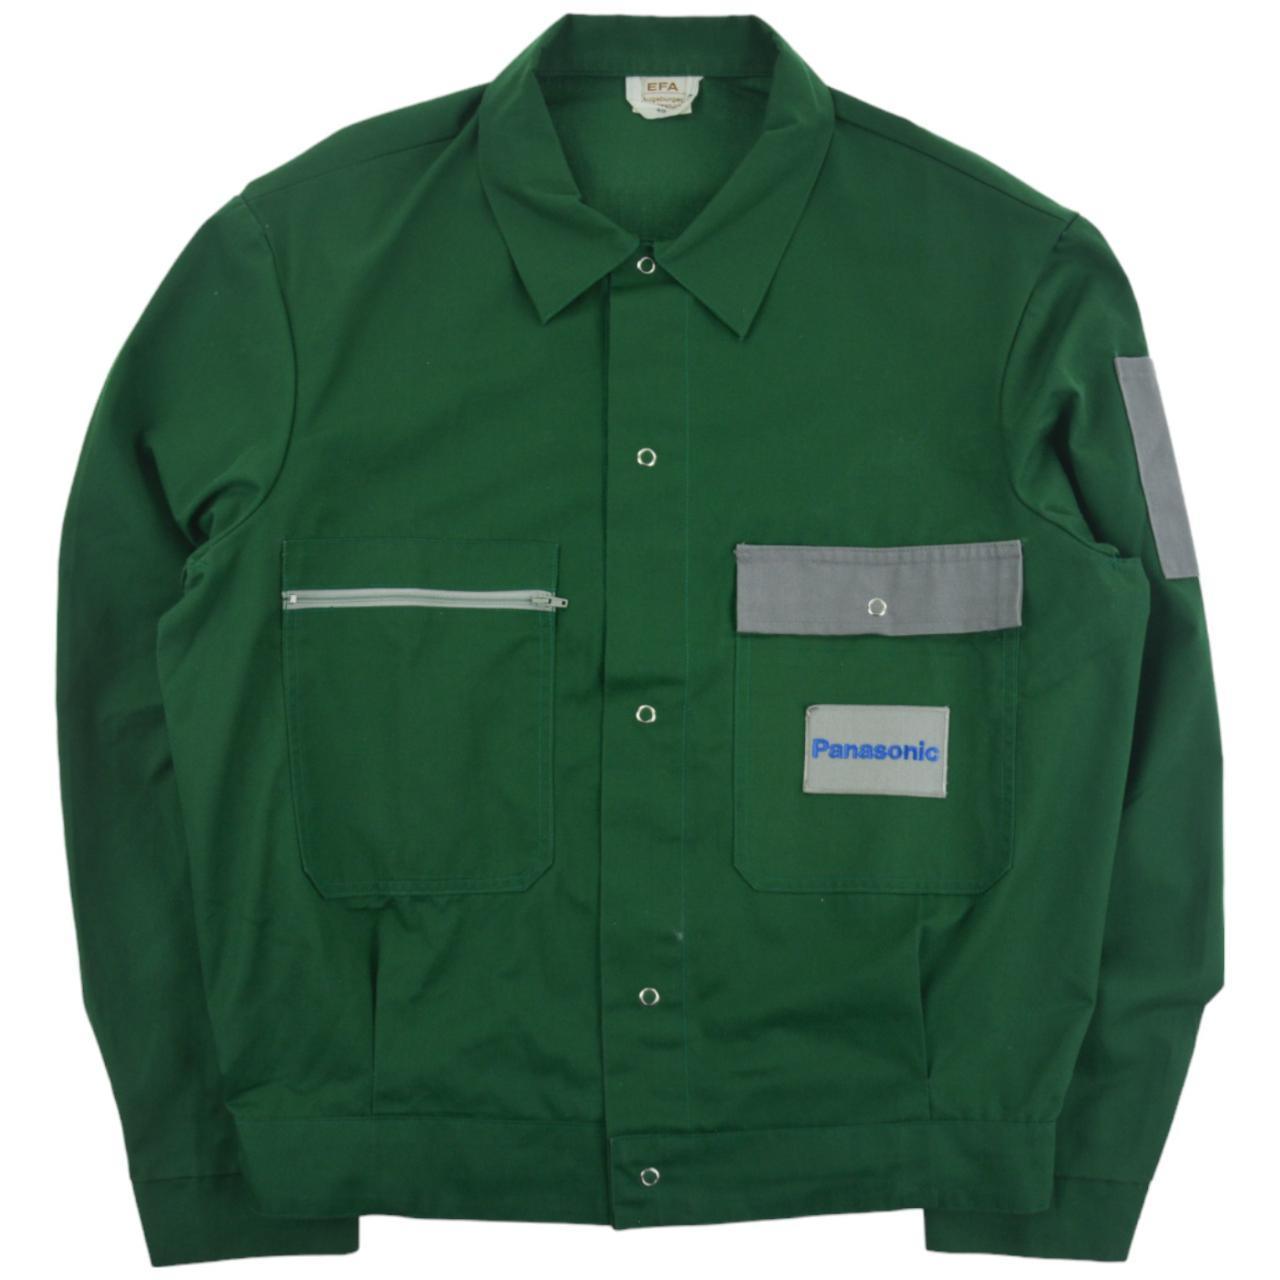 Vintage Panasonic Workwear Jacket Size S - Known Source